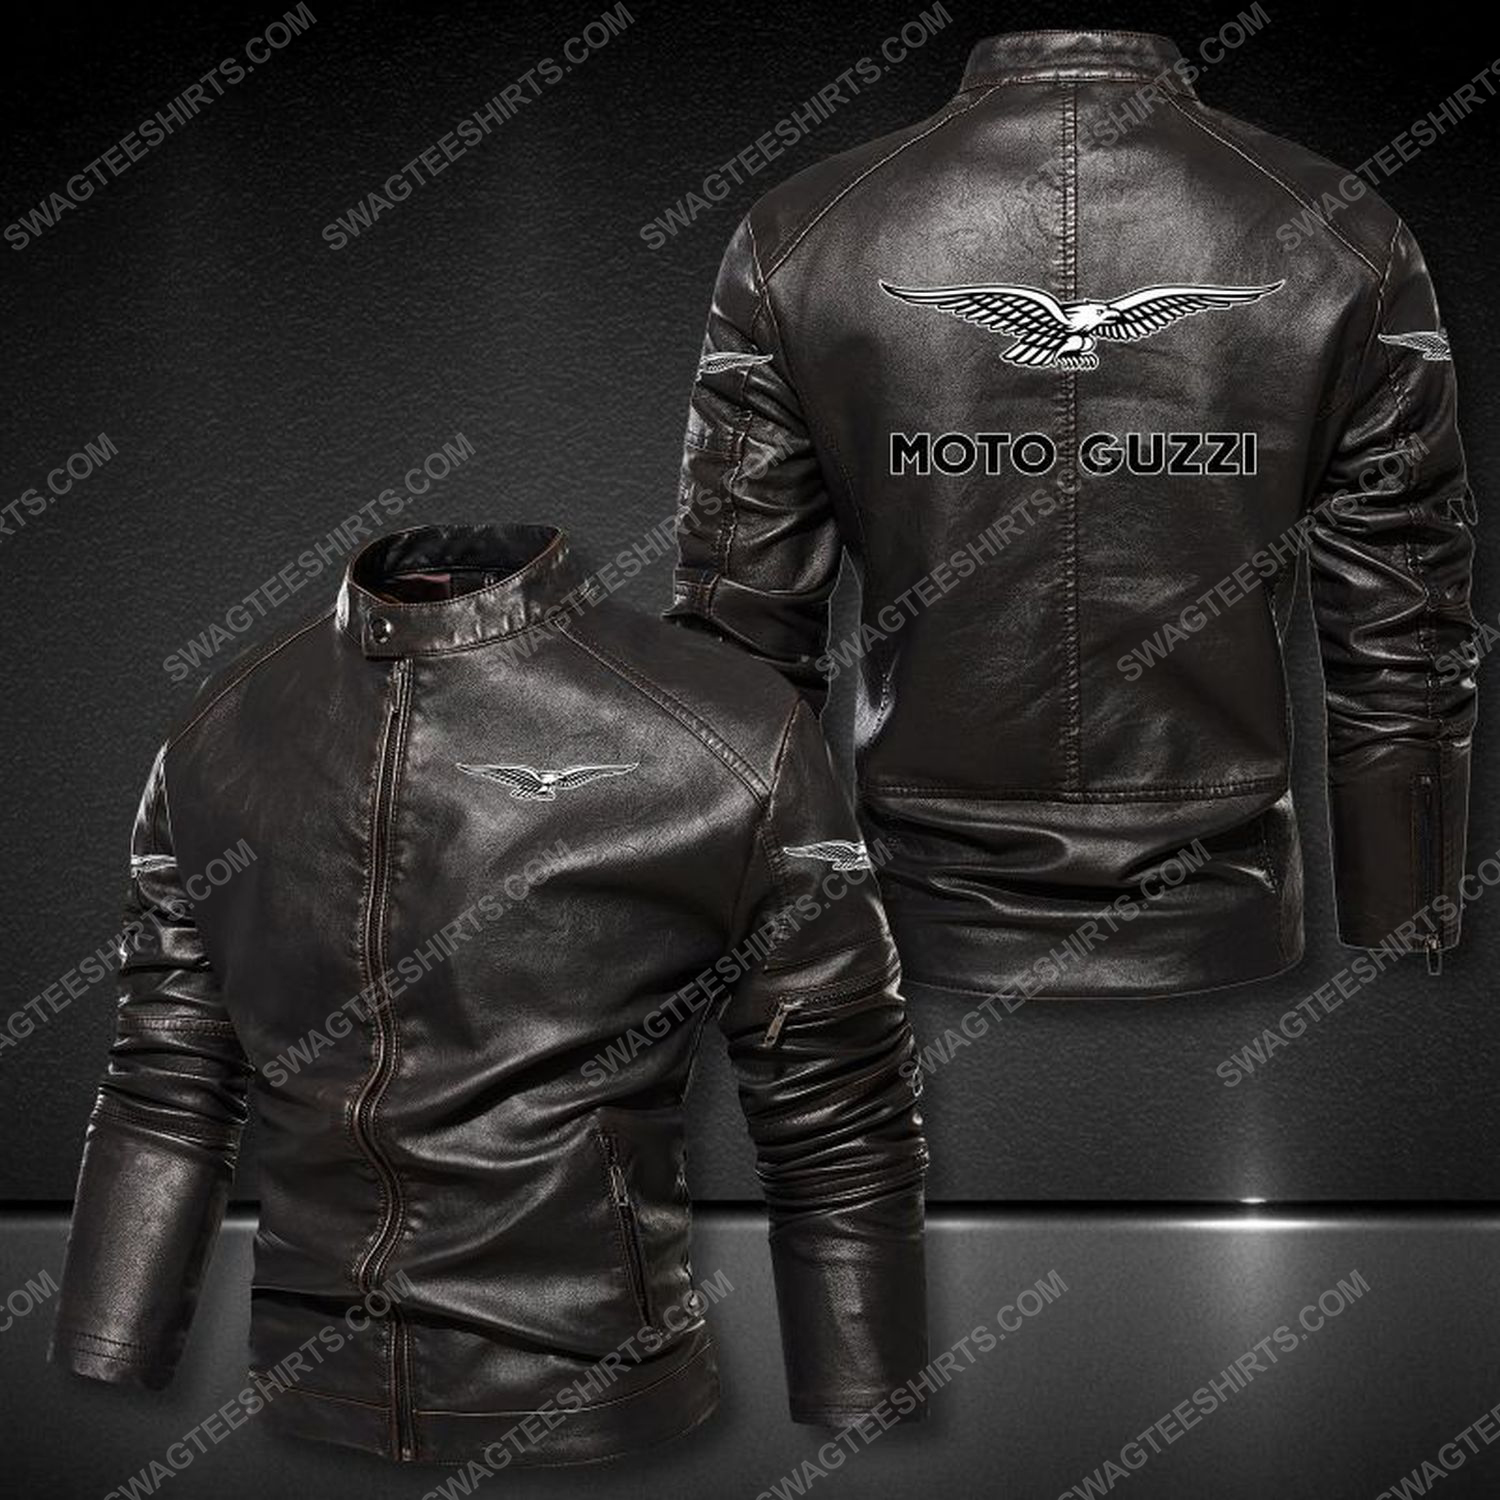 Moto guzzi motorcycles sport leather jacket 1 - Copy